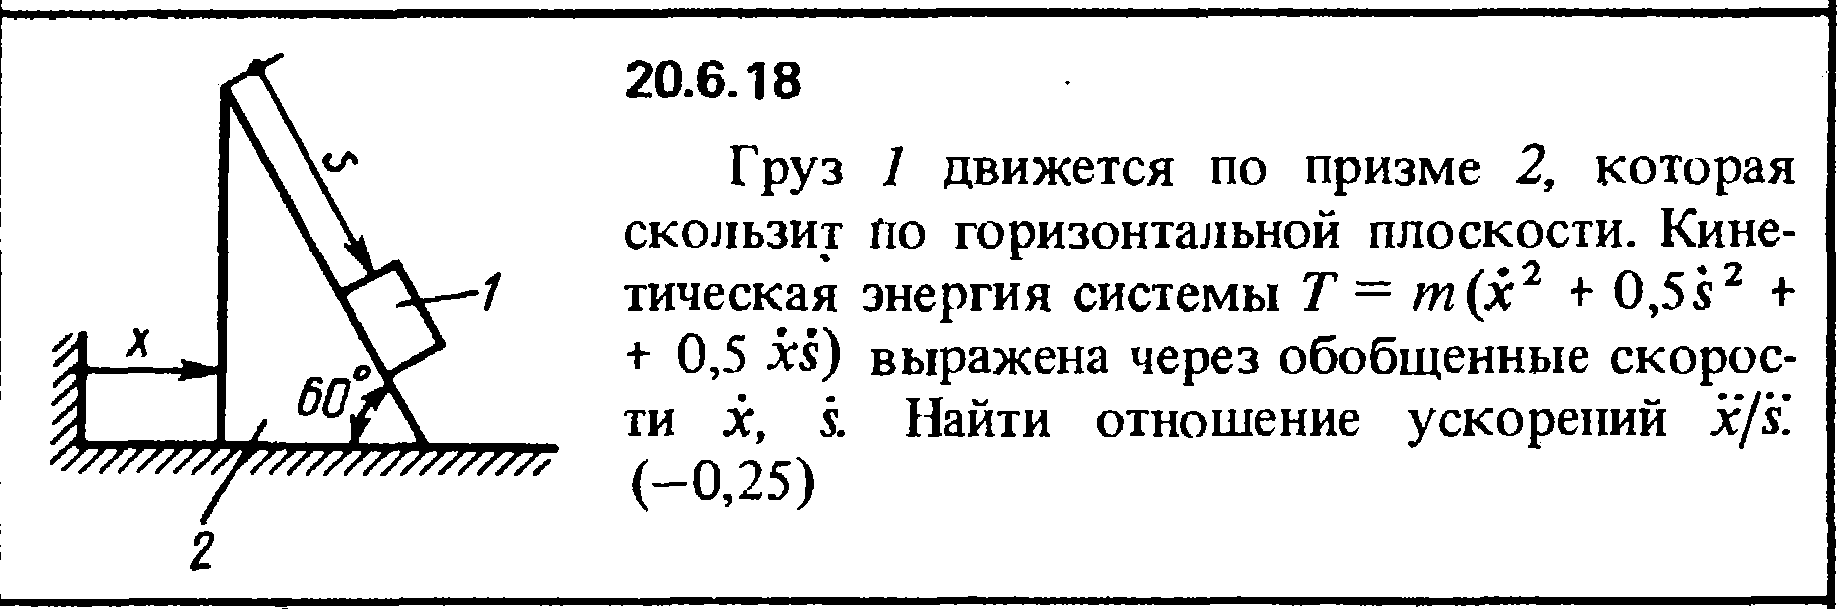 Решение 20.6.18 из сборника (решебника) Кепе О.Е. 1989